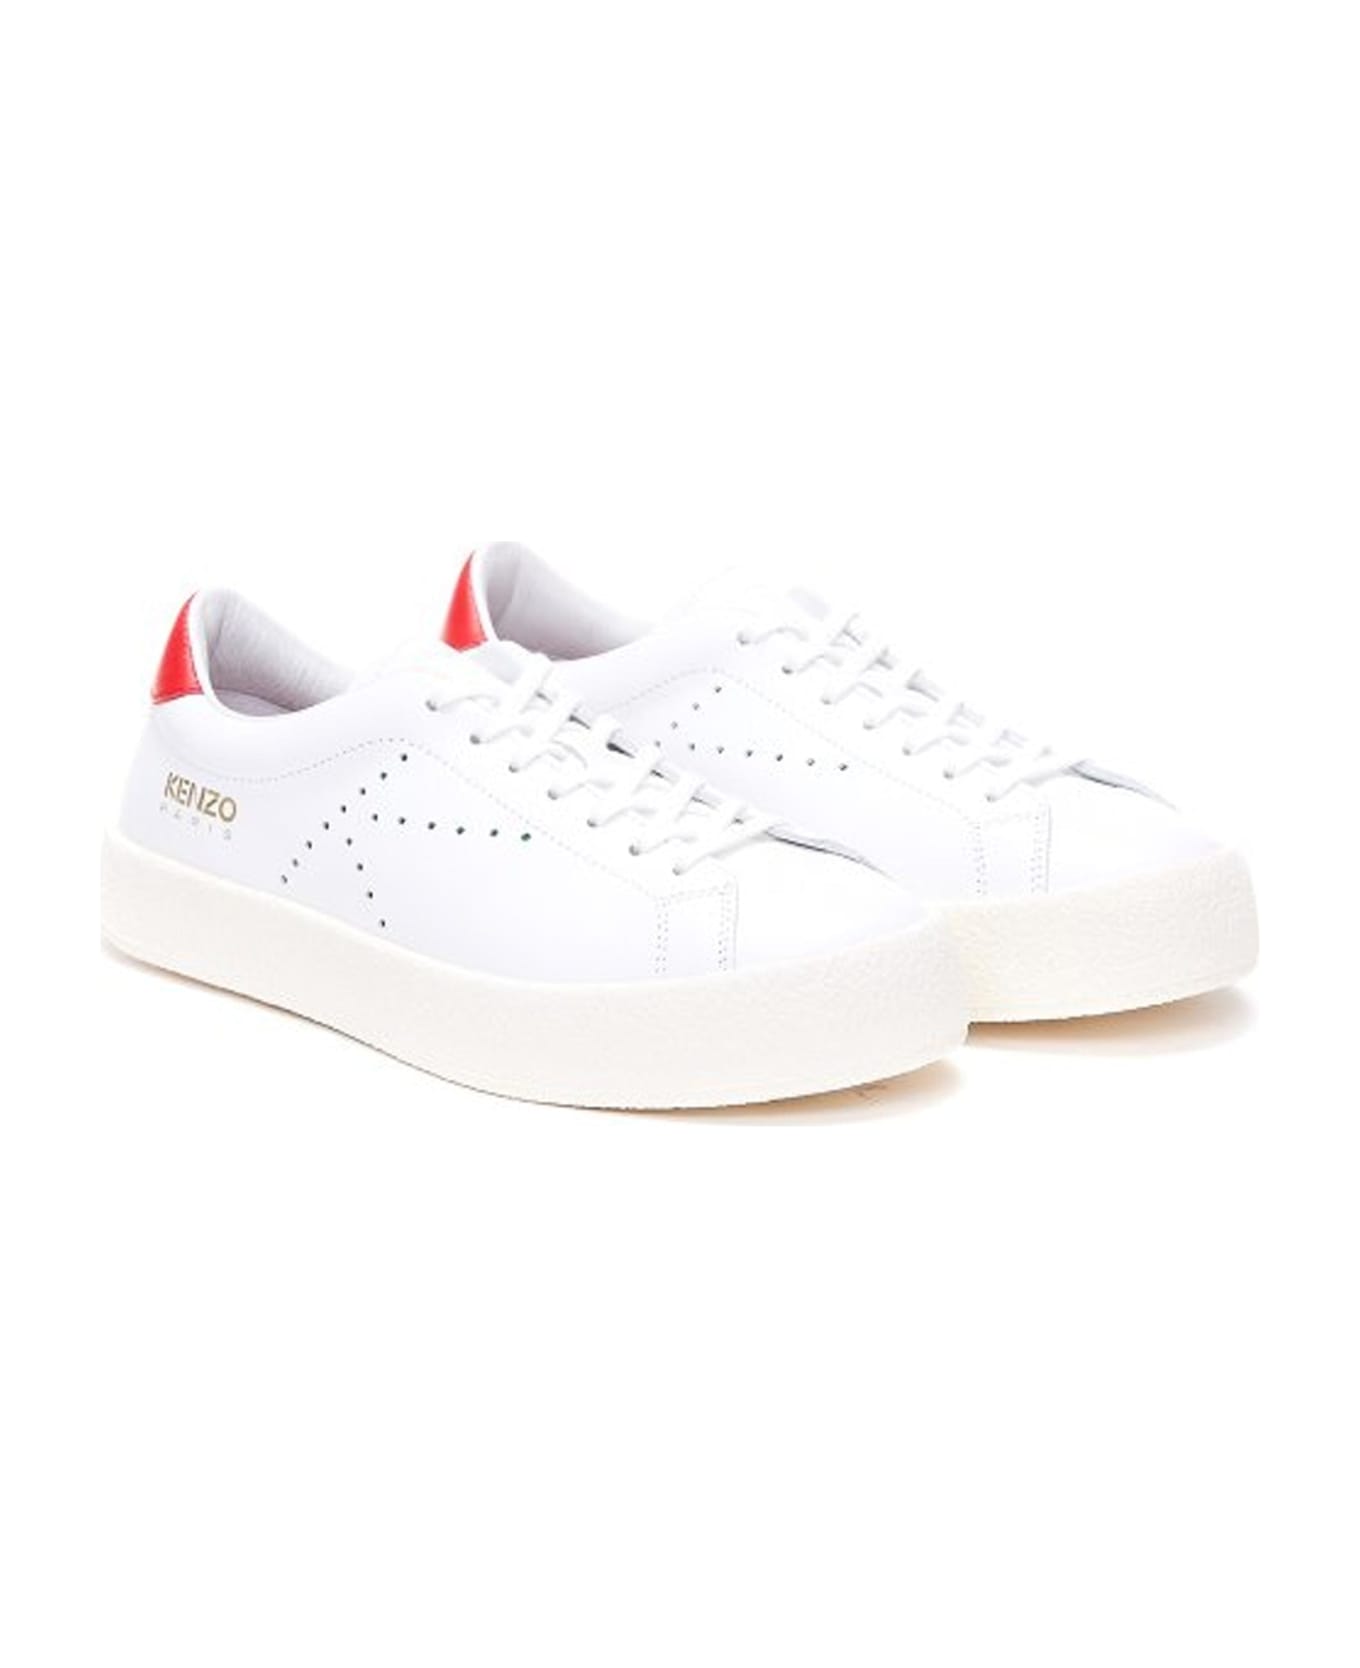 Kenzo Leather Sneakers - White